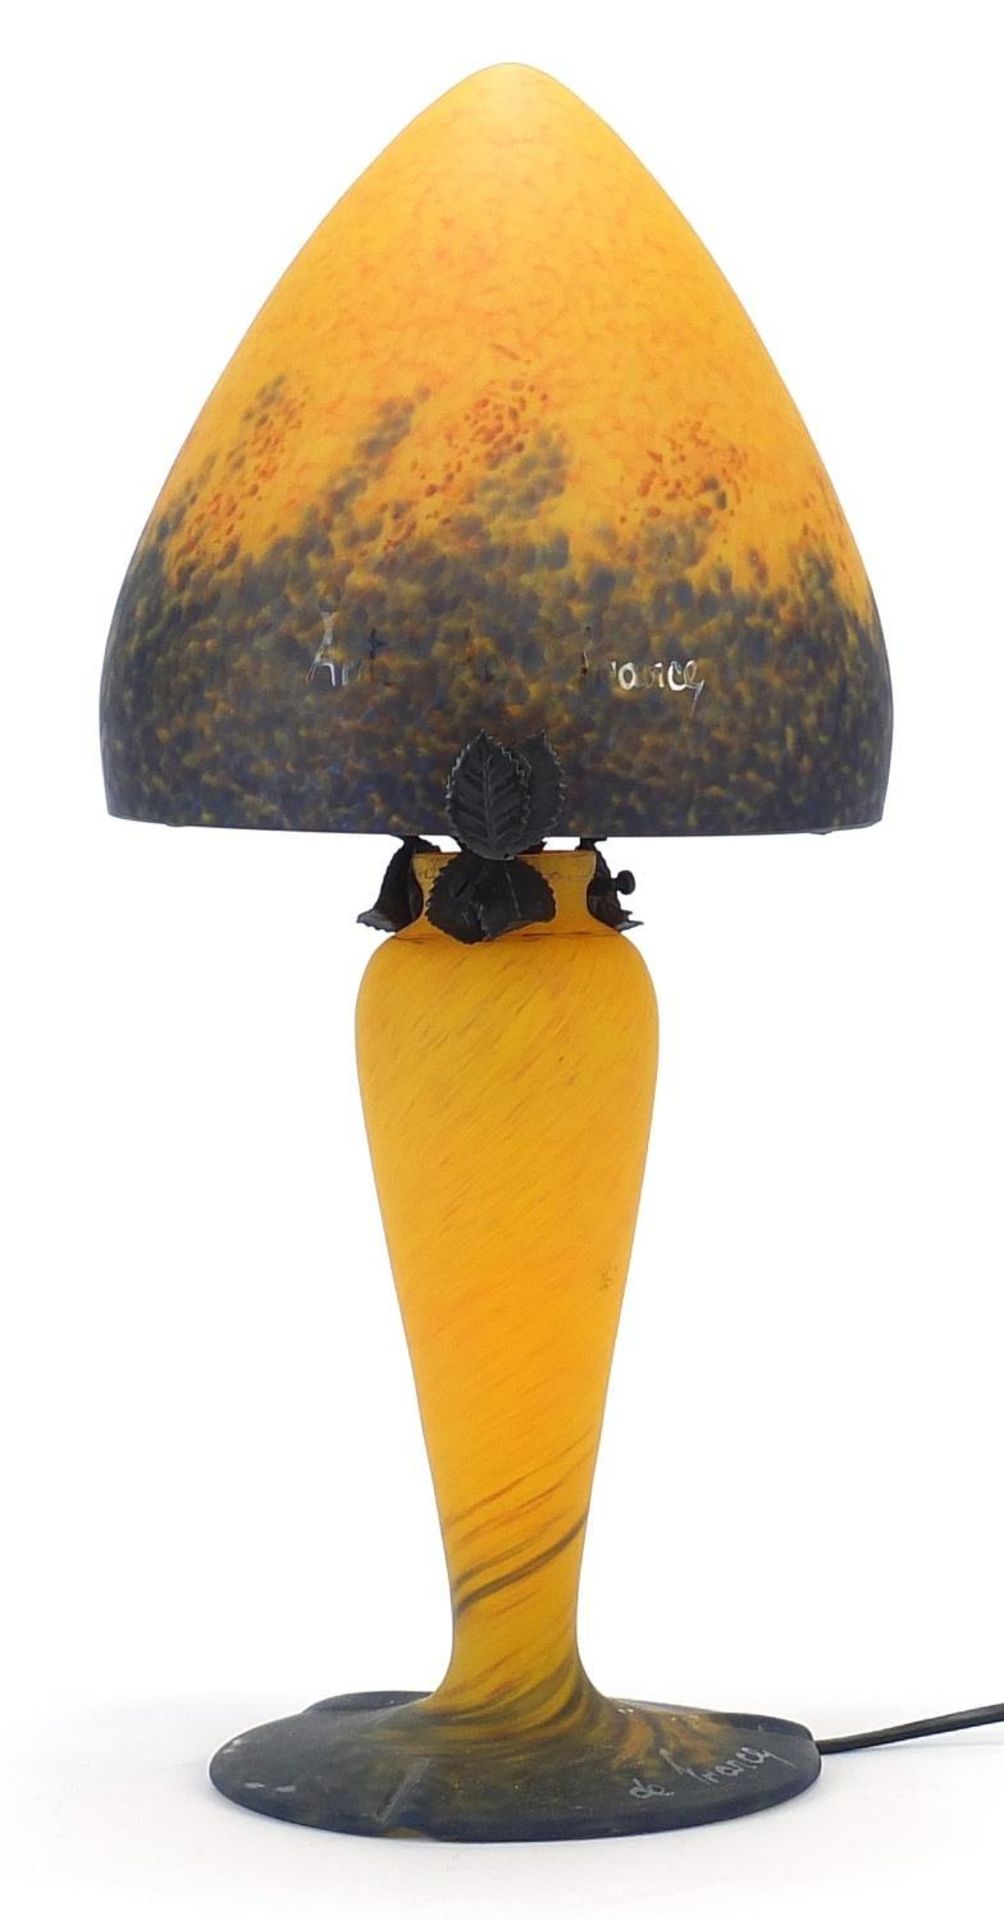 French mottled orange art glass mushroom table lamp with shade, 45.5cm high :